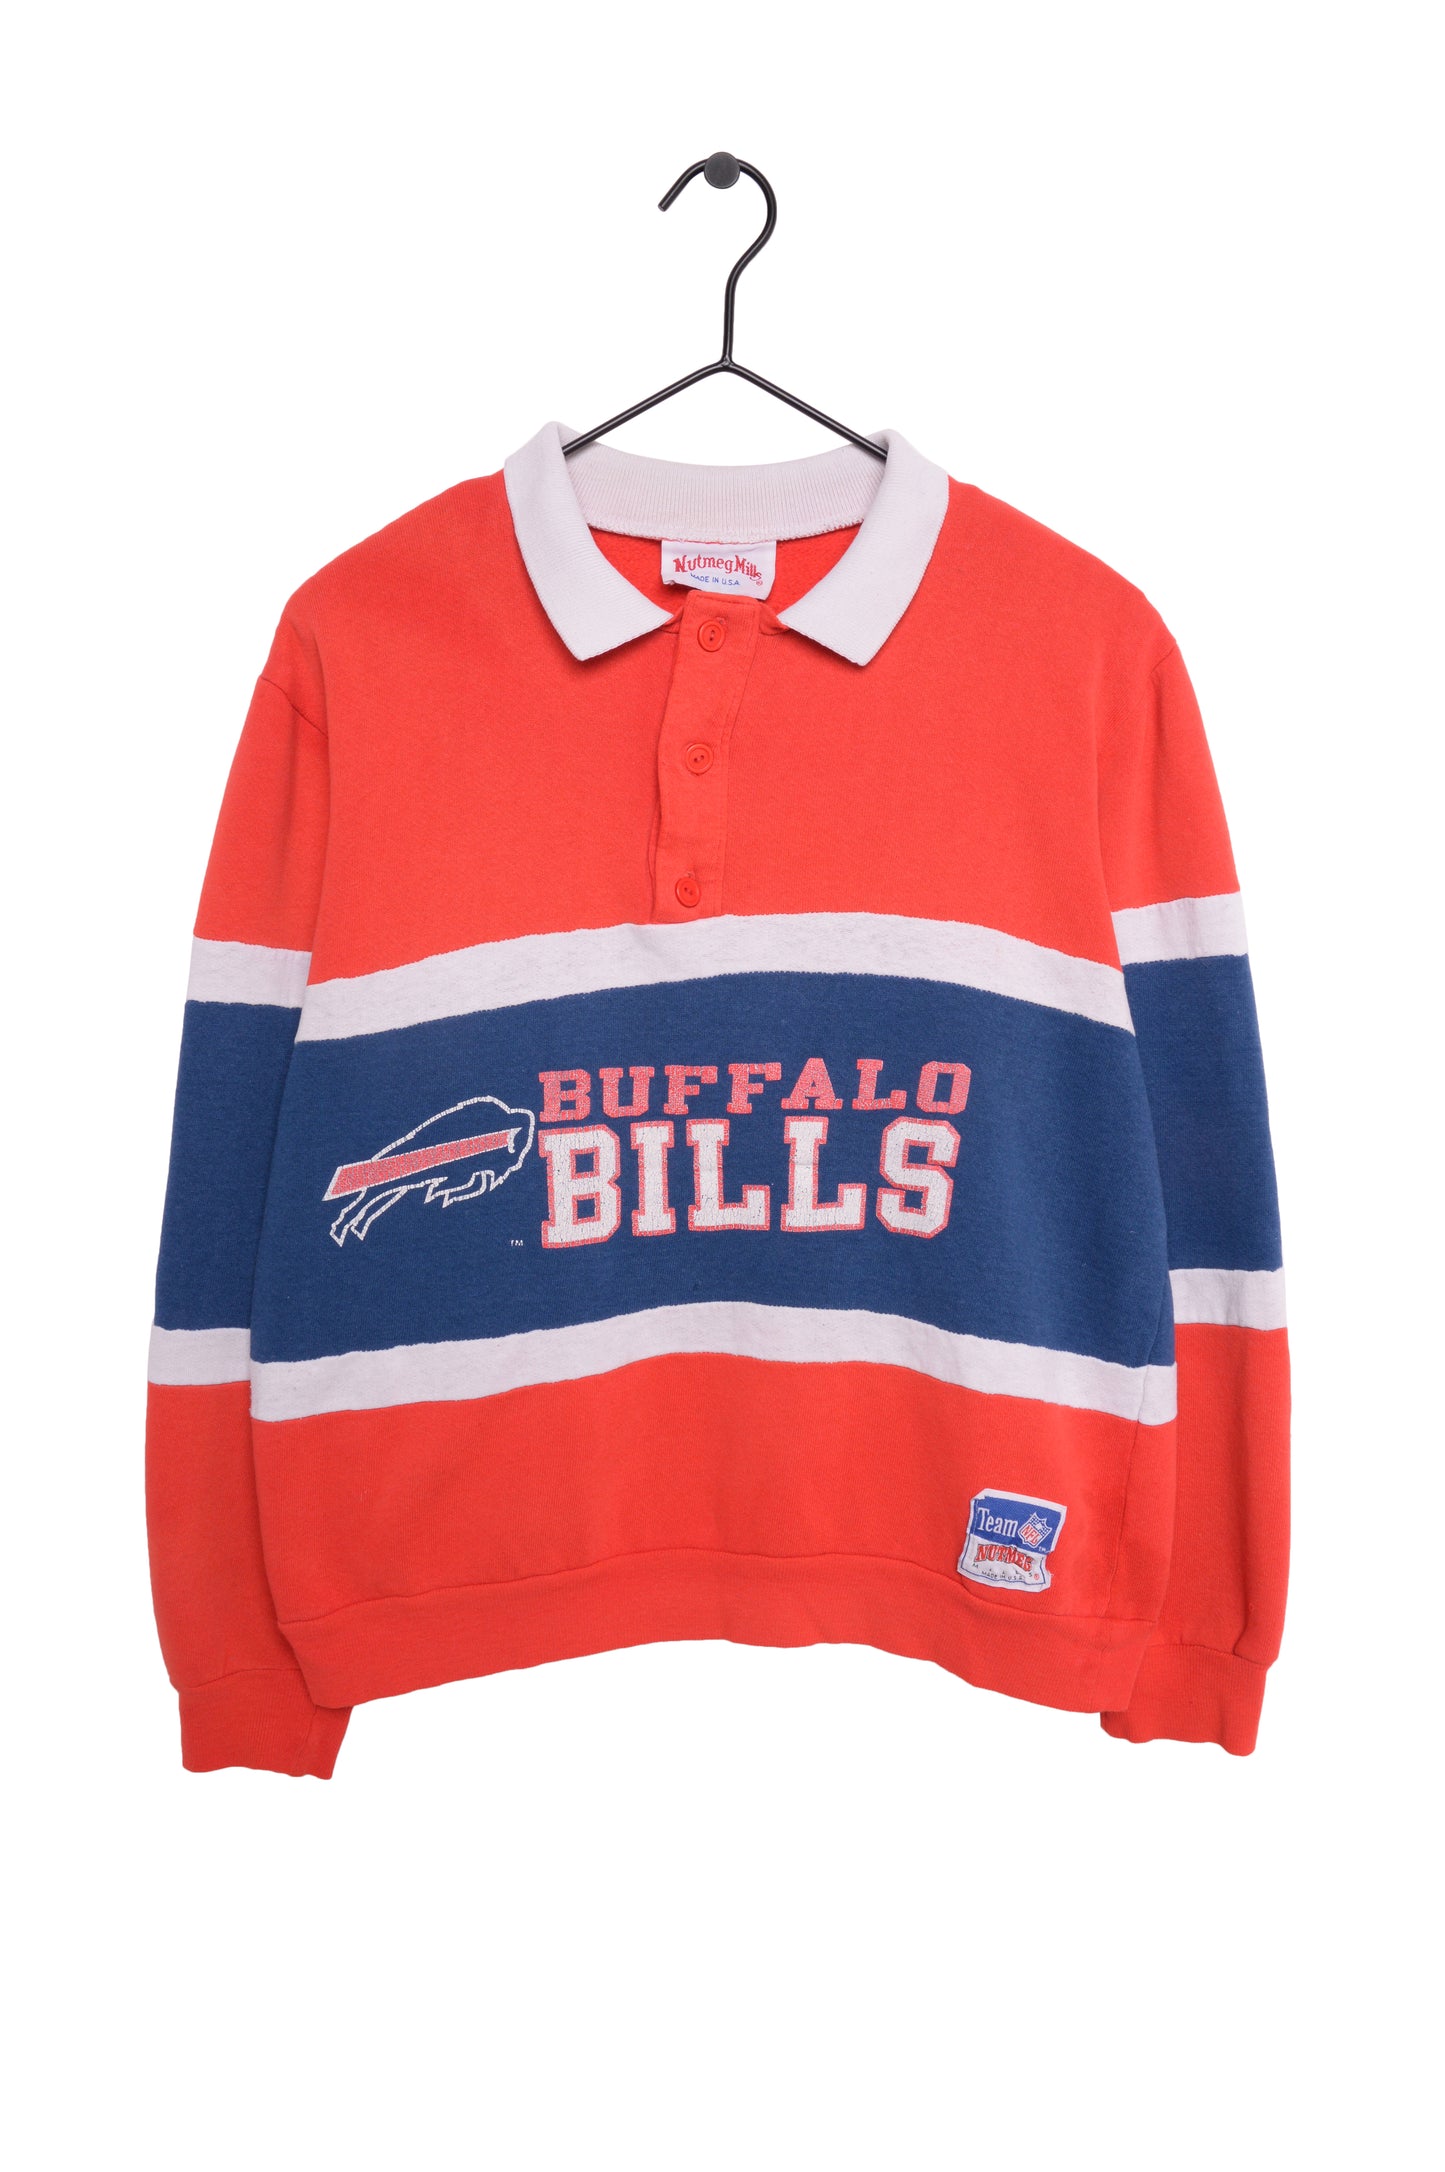 Buffalo Bills Collared Sweatshirt USA